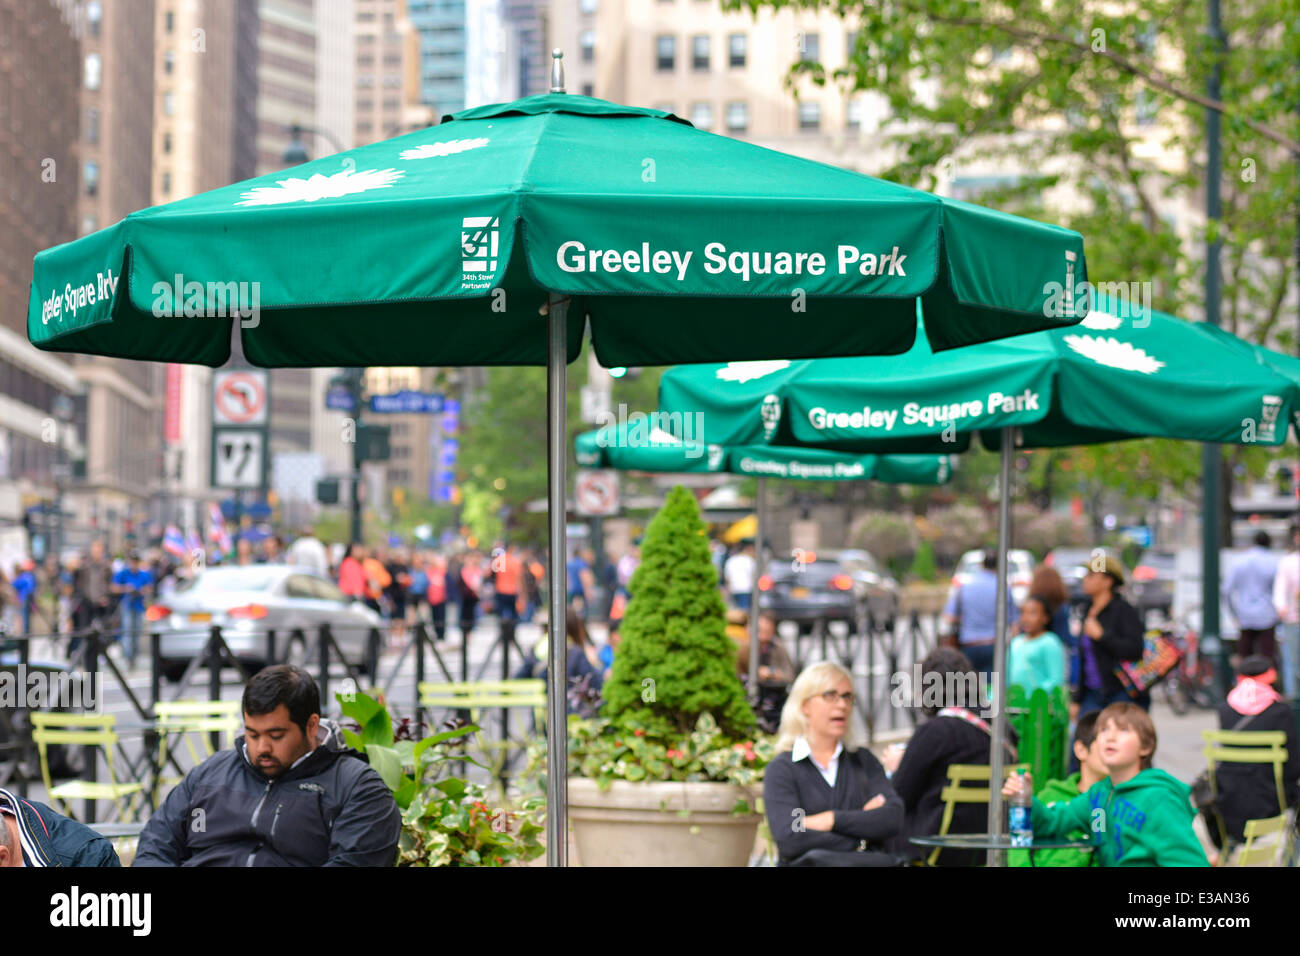 Greeley Square Park, Midtown West New York, NY Stock Photo